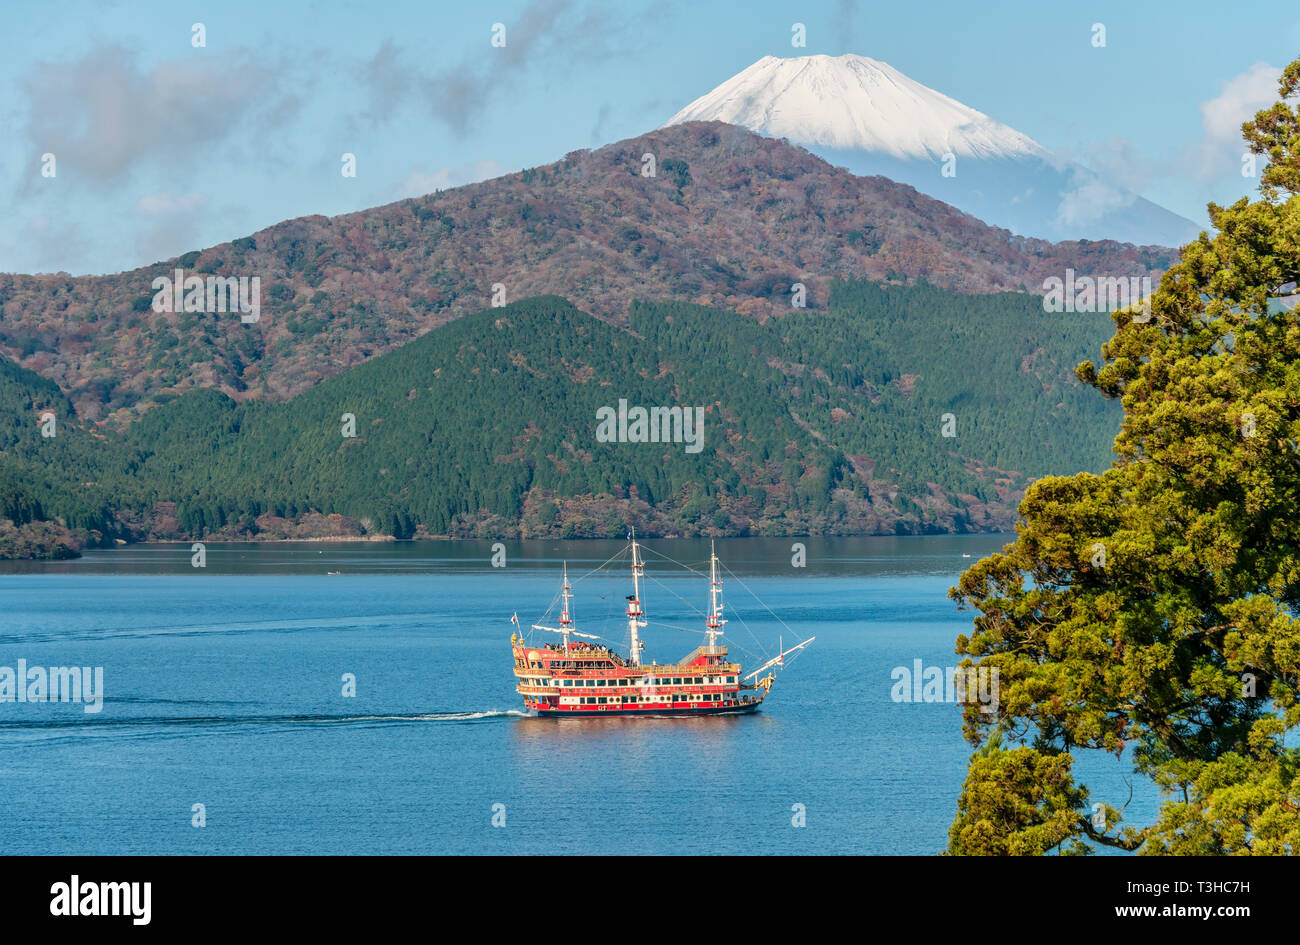 Lago Ashi (Ashinoko) visita turística barco pirata Royal II con el Monte Fuji al fondo, Hakone, Japón Foto de stock